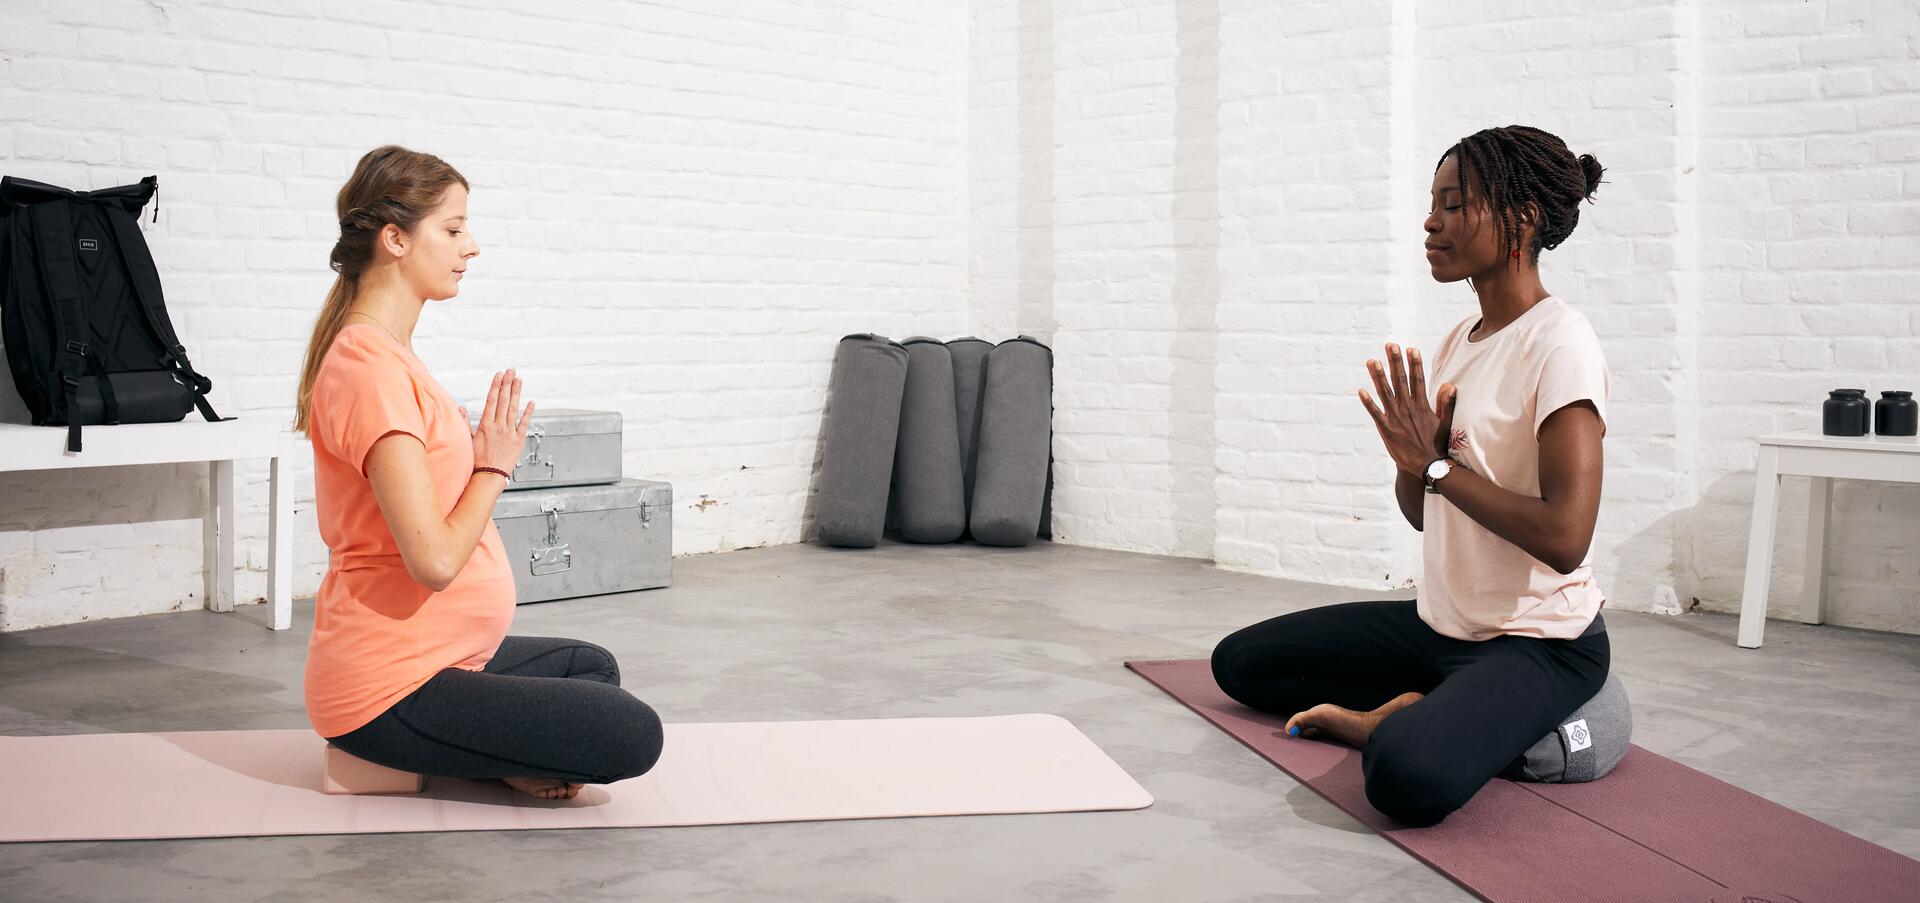 medytujące kobiety na matach do jogi